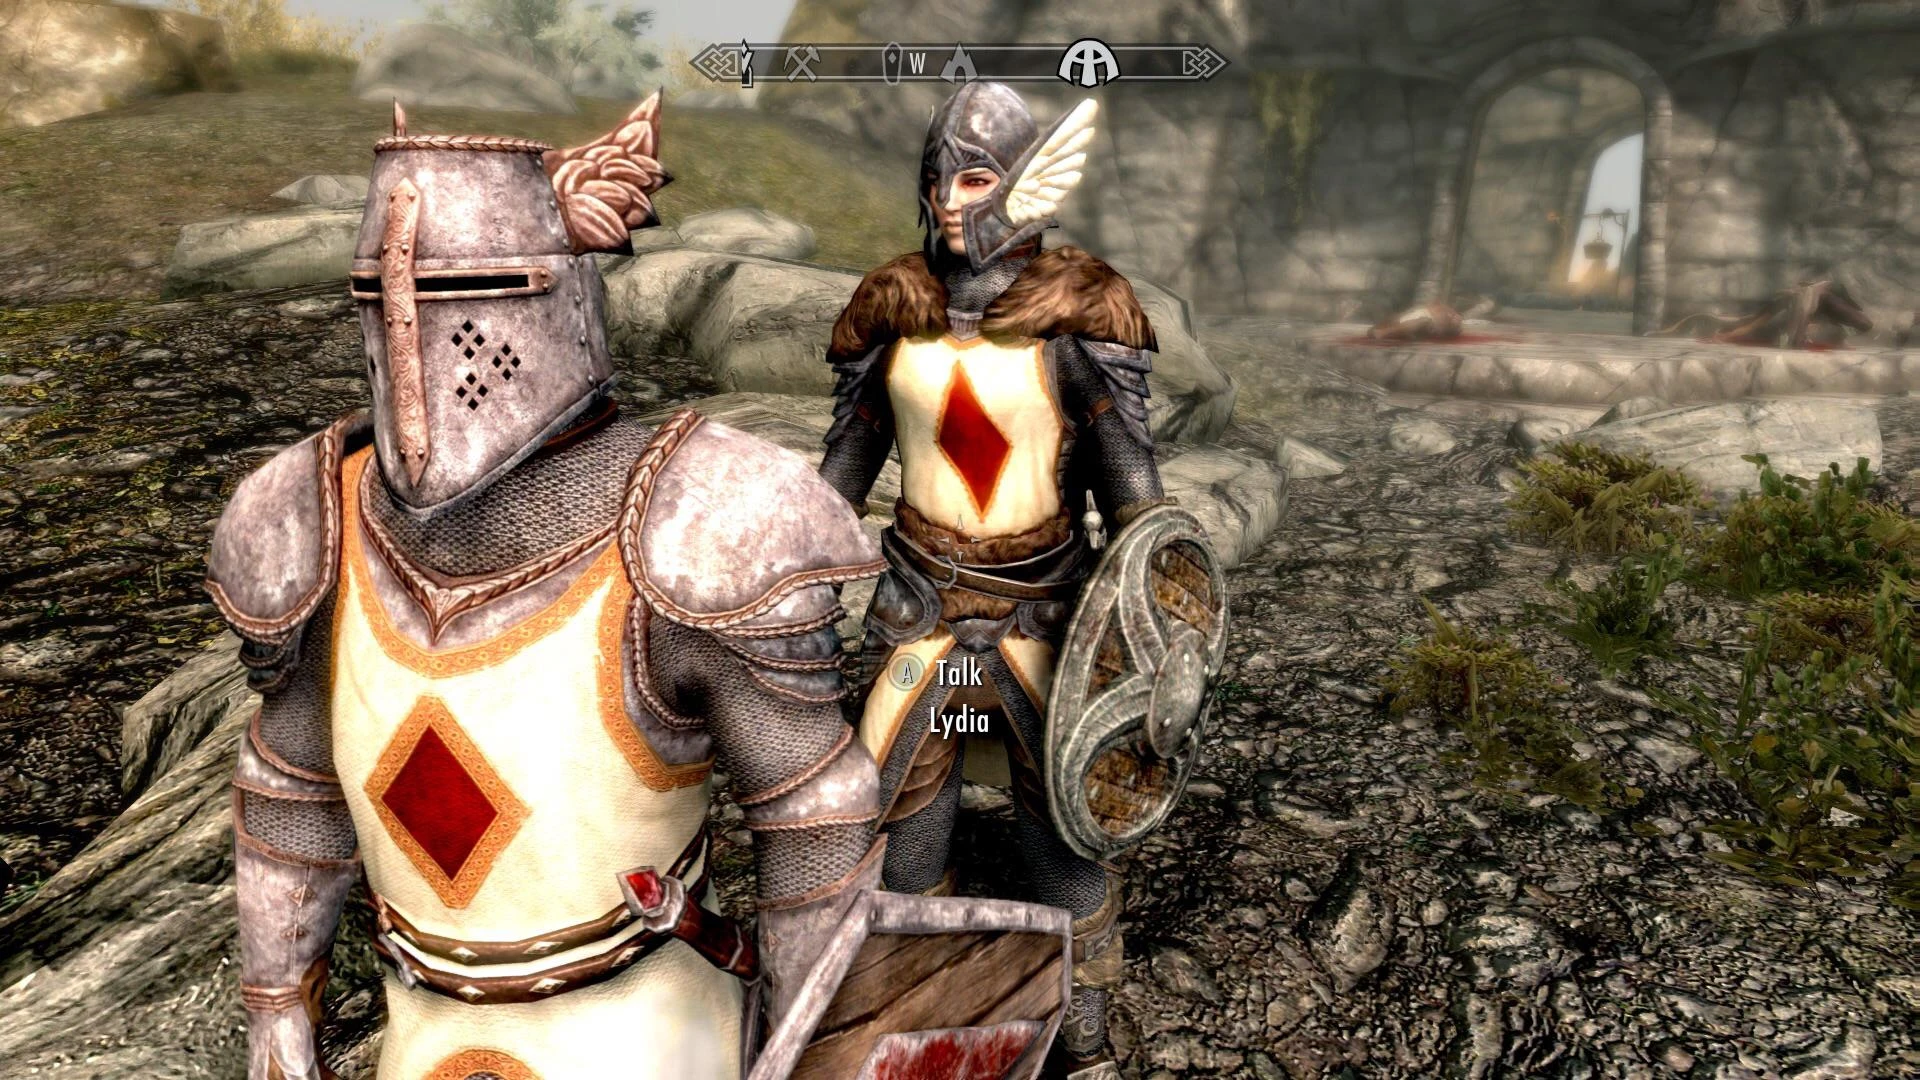 skyrim crusader king armor makes game crash